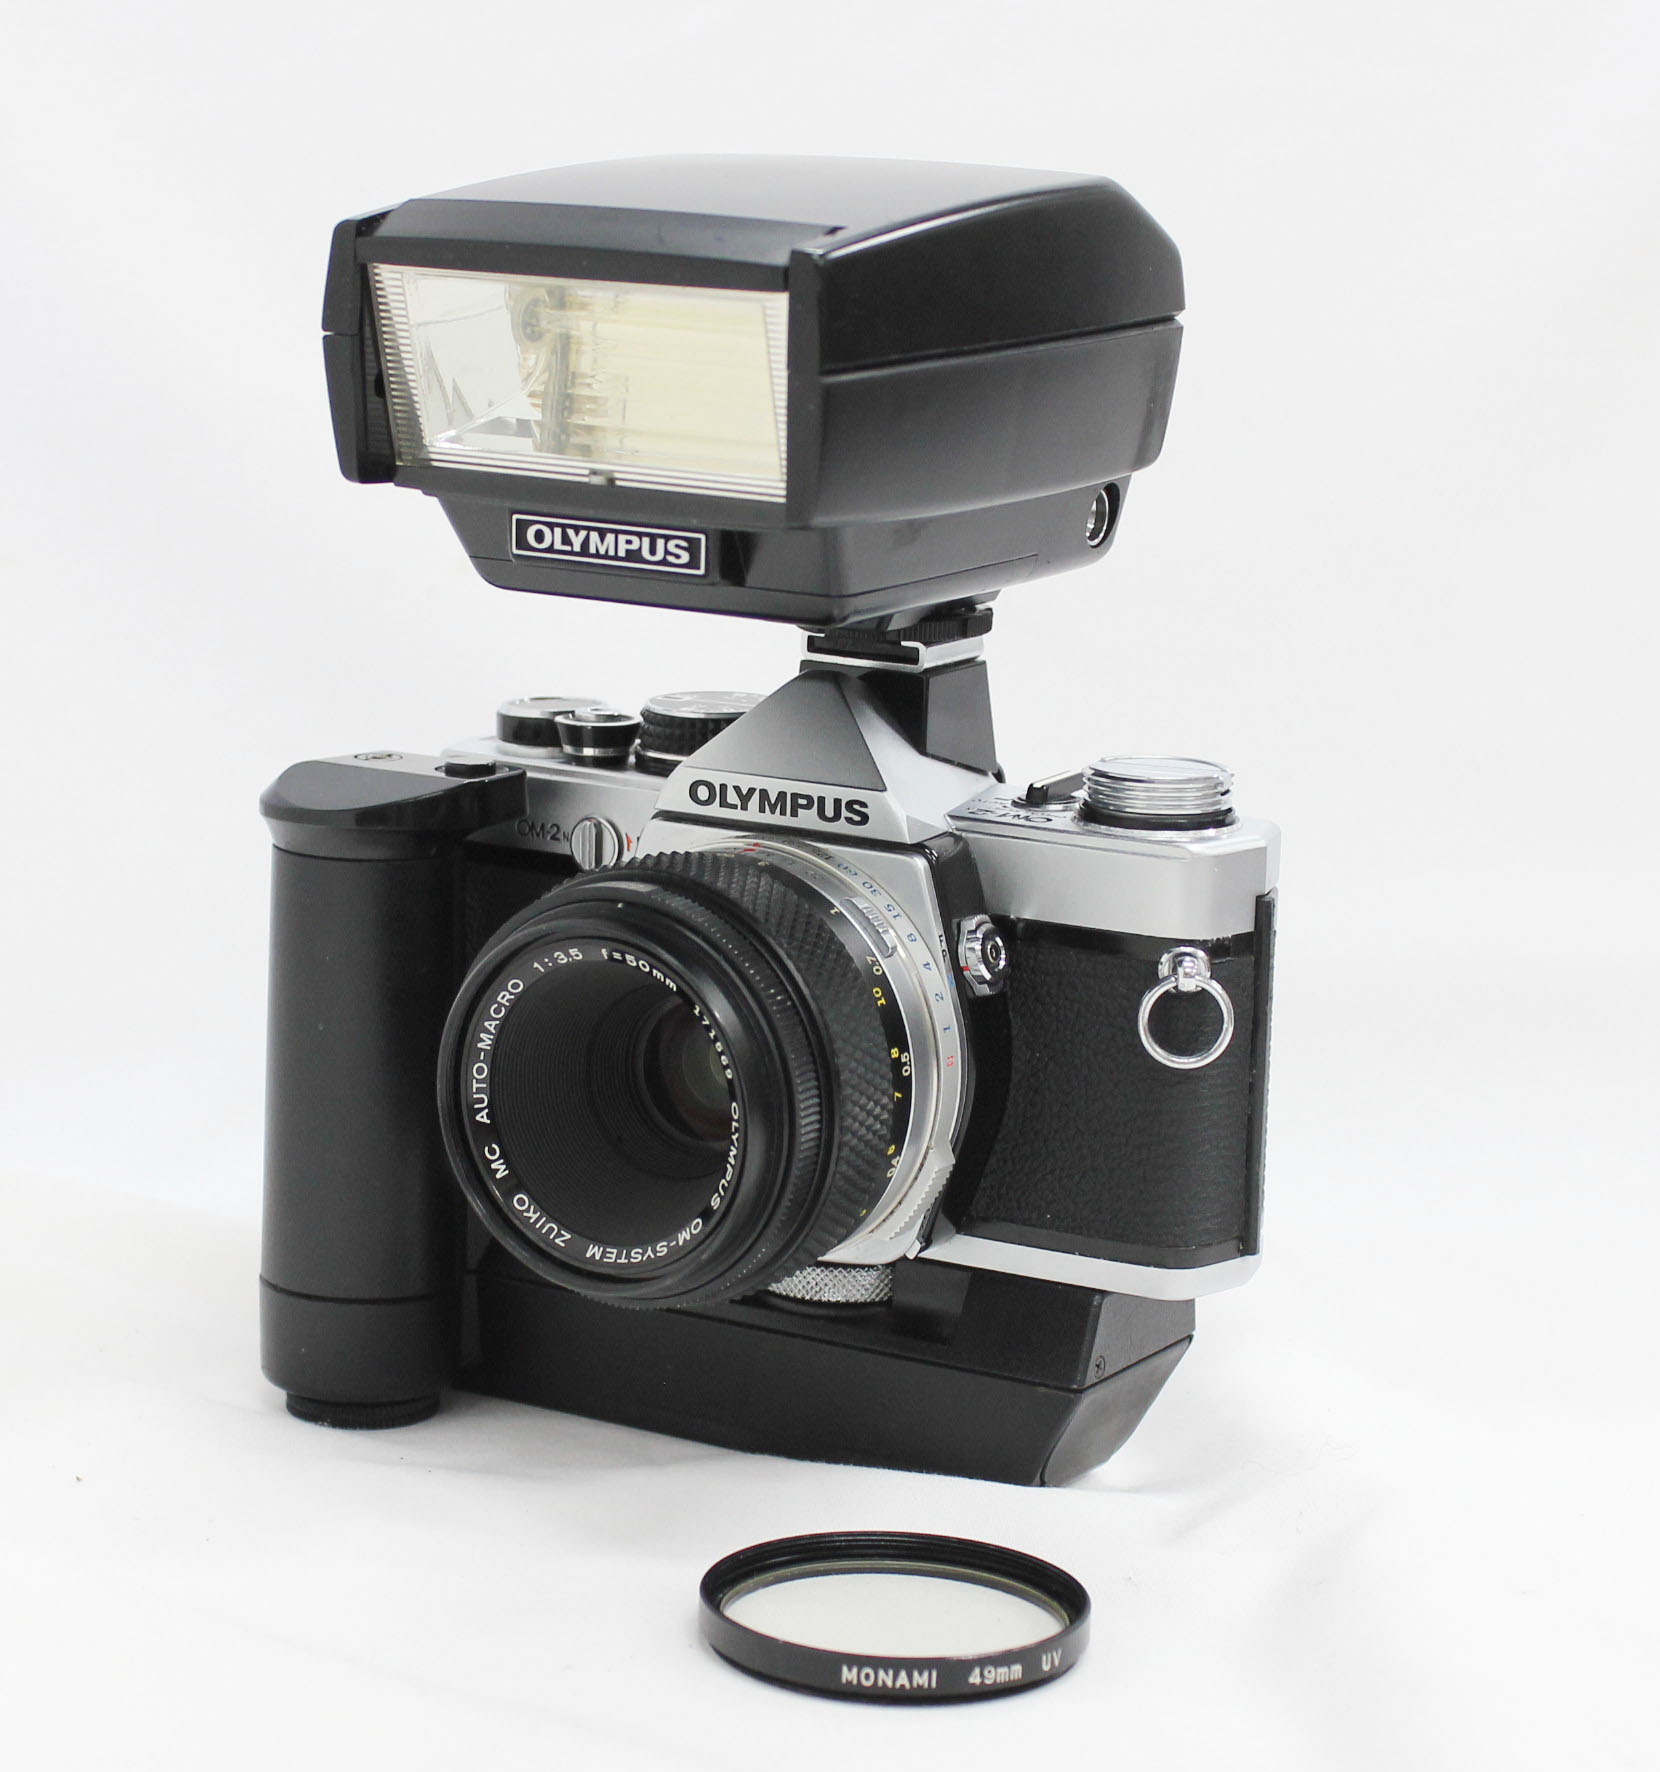 Japan Used Camera Shop | Olympus OM-2N 35mm SLR Film Camera with Macro 50mm F/3.5 Lens, Winder & Flash from Japan